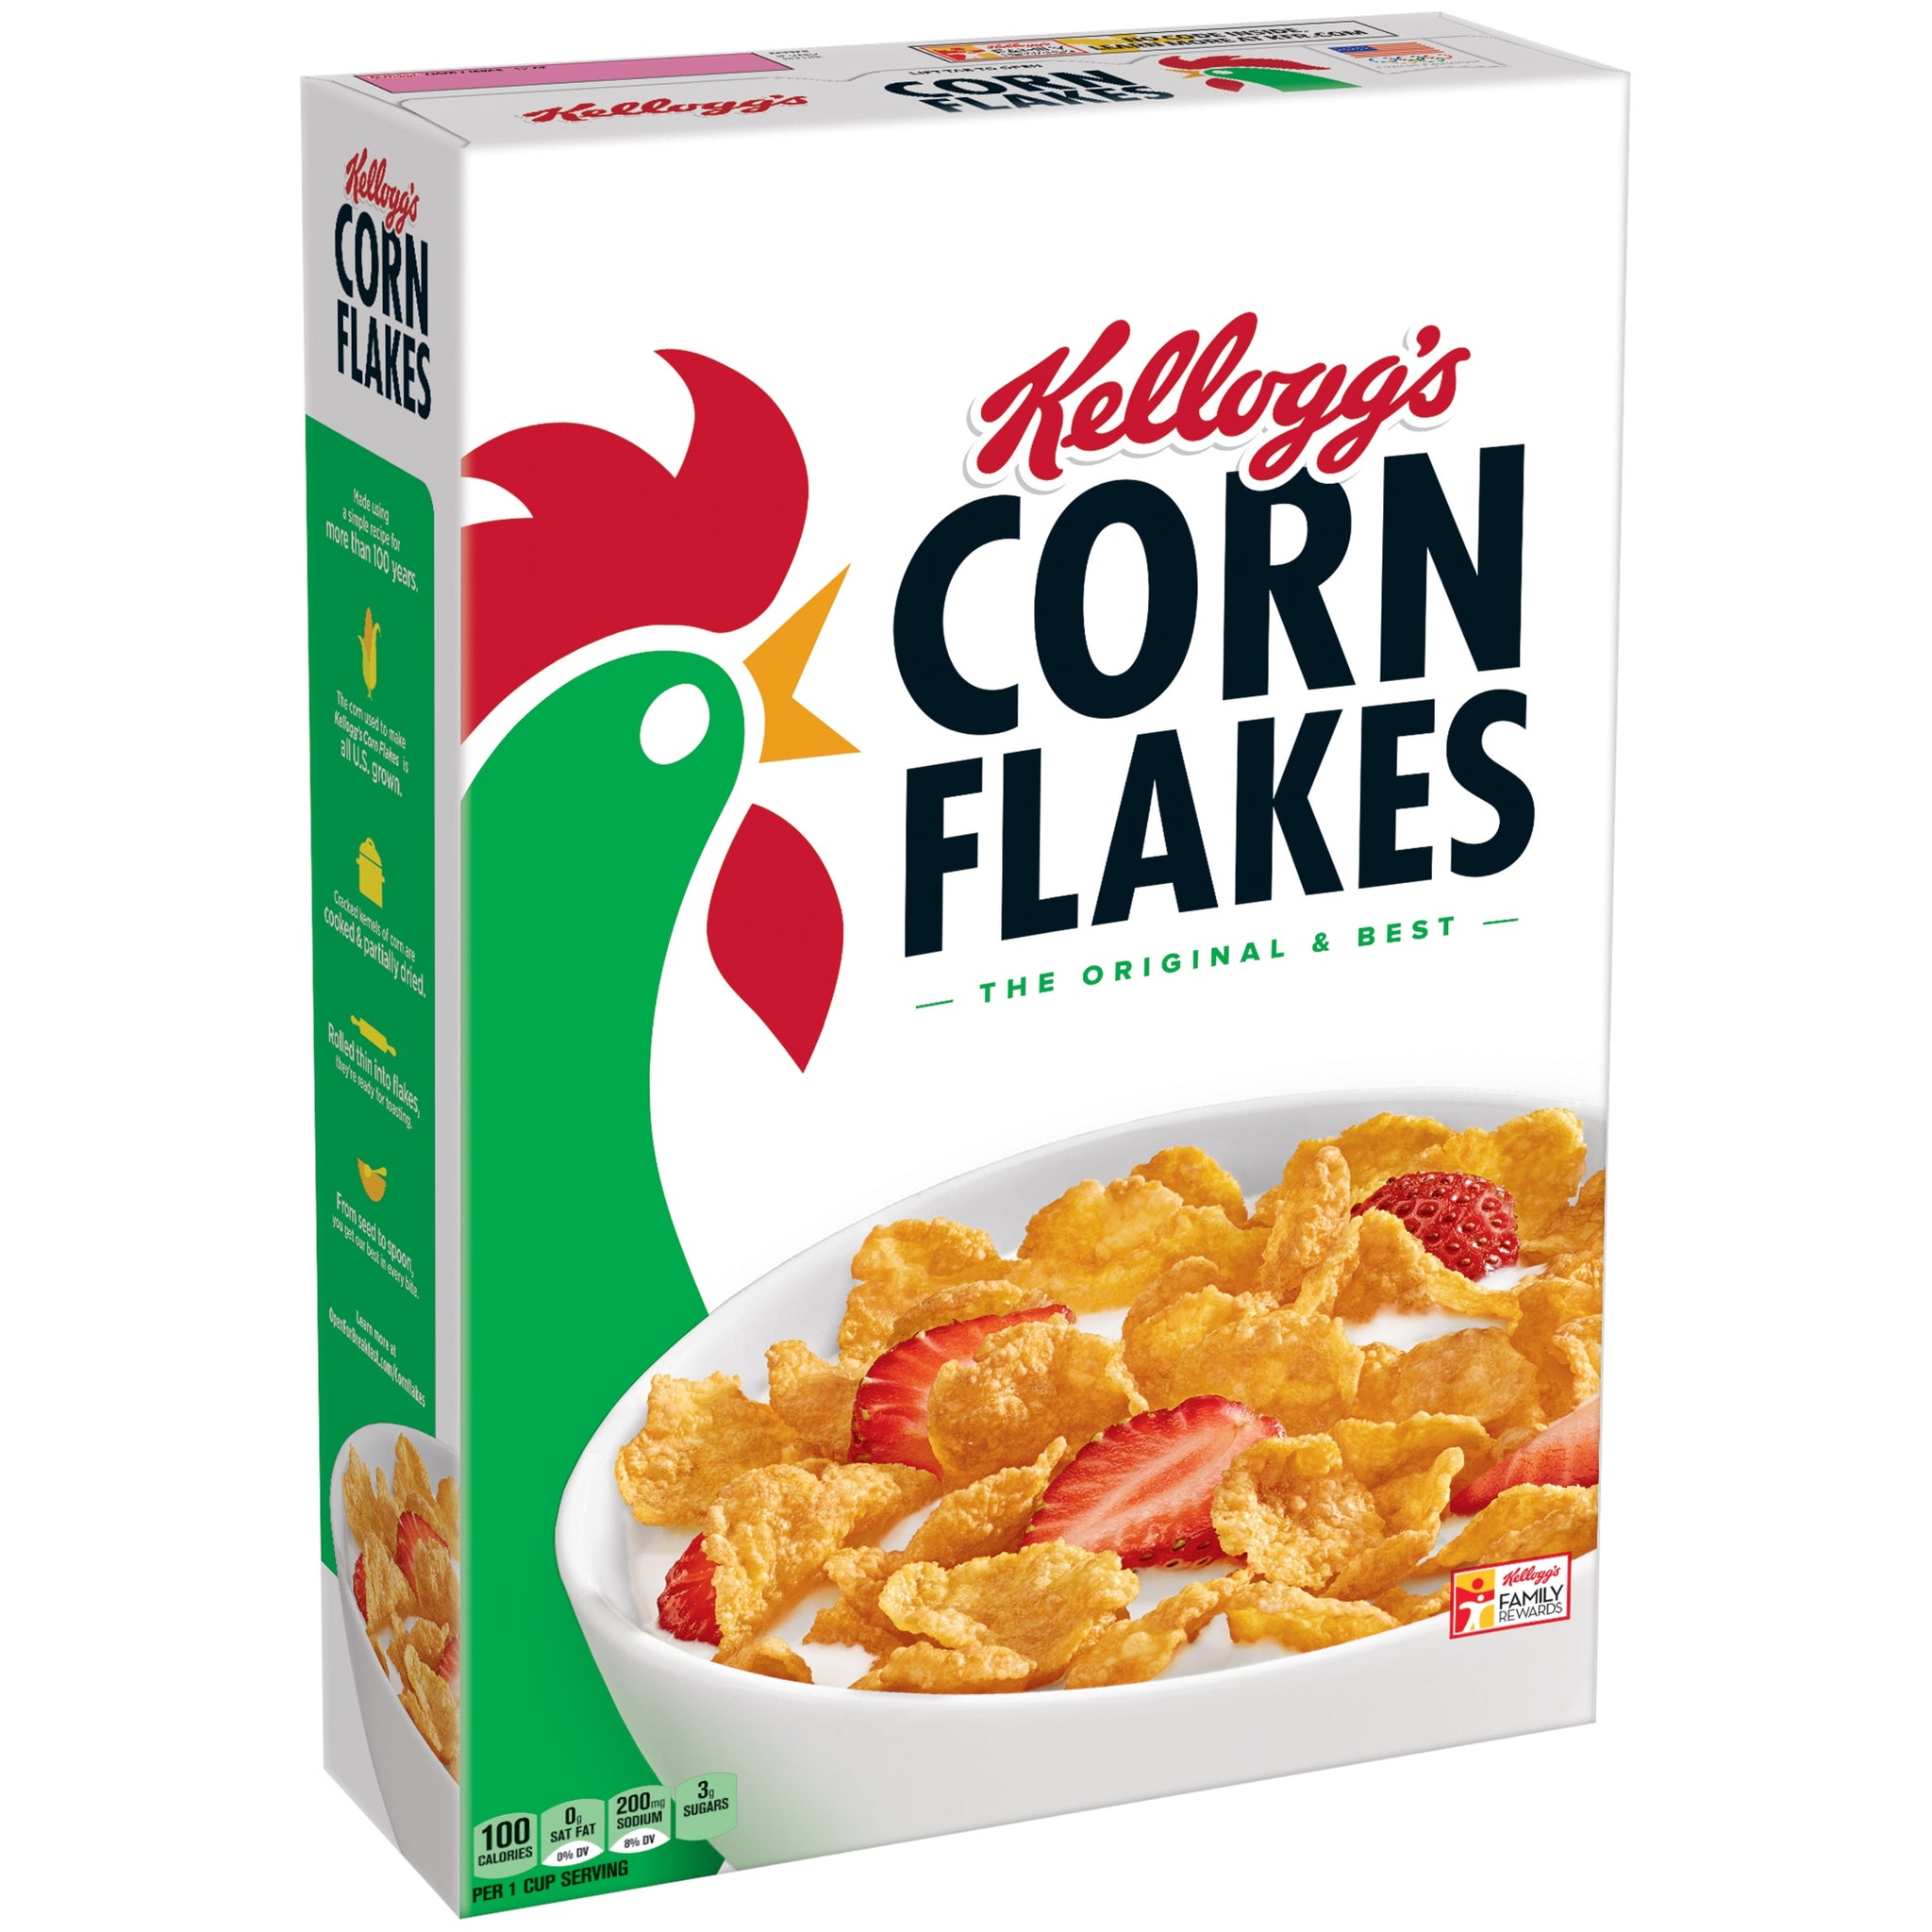 stl>Kellogg's Corn Flakes - 1 Box - 12oz